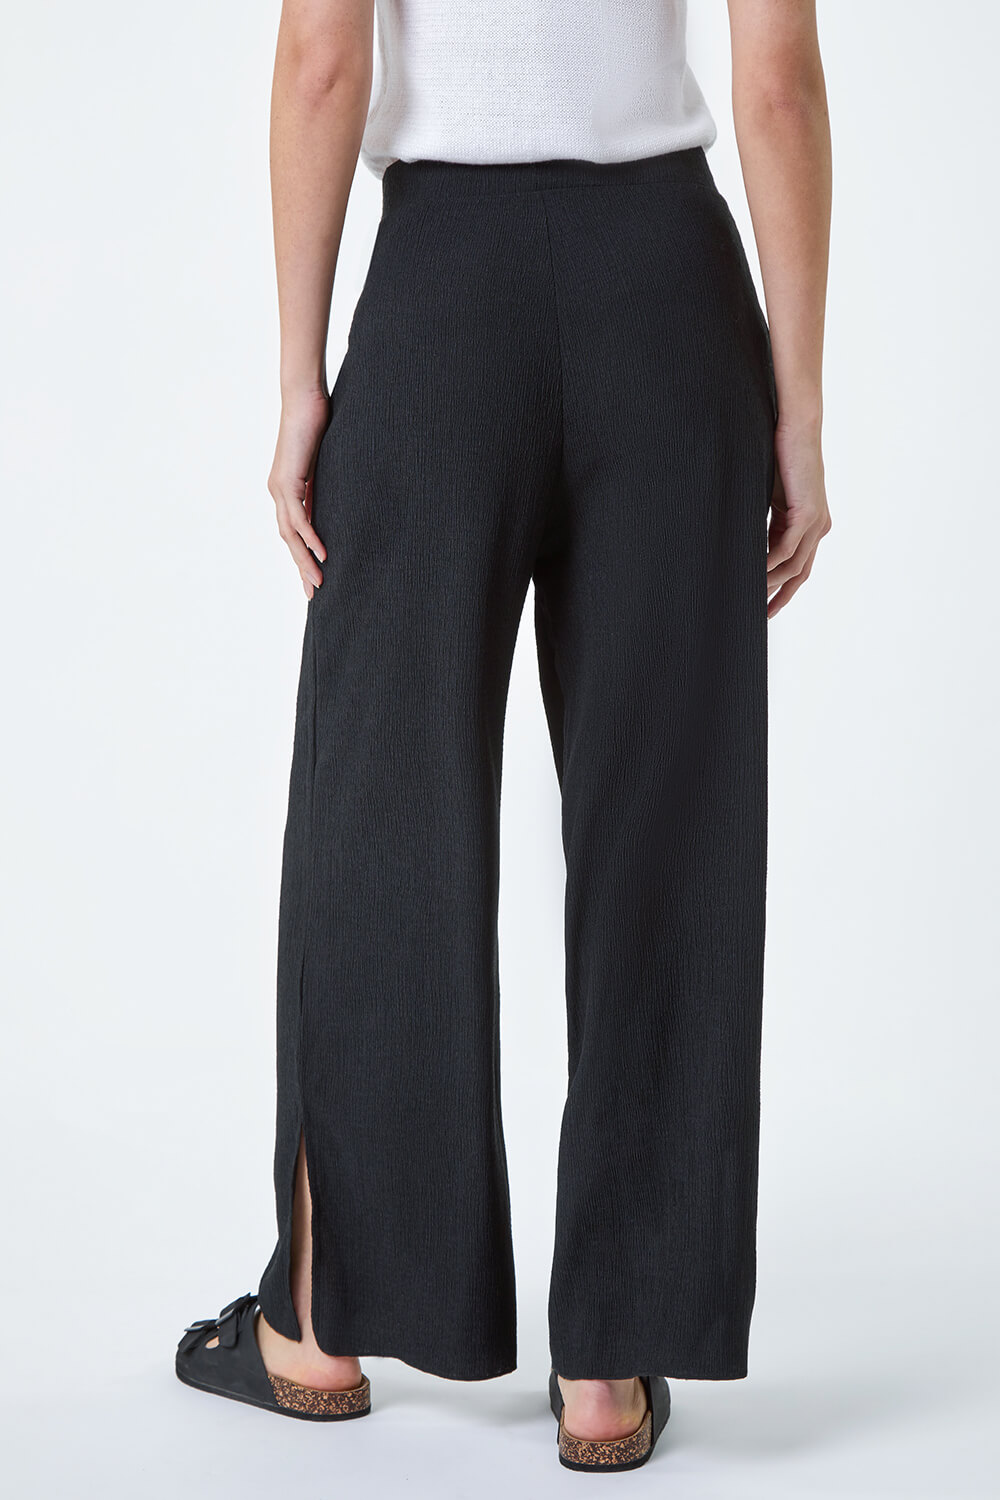 Black Crinkle Side Split Stretch Trousers, Image 3 of 5